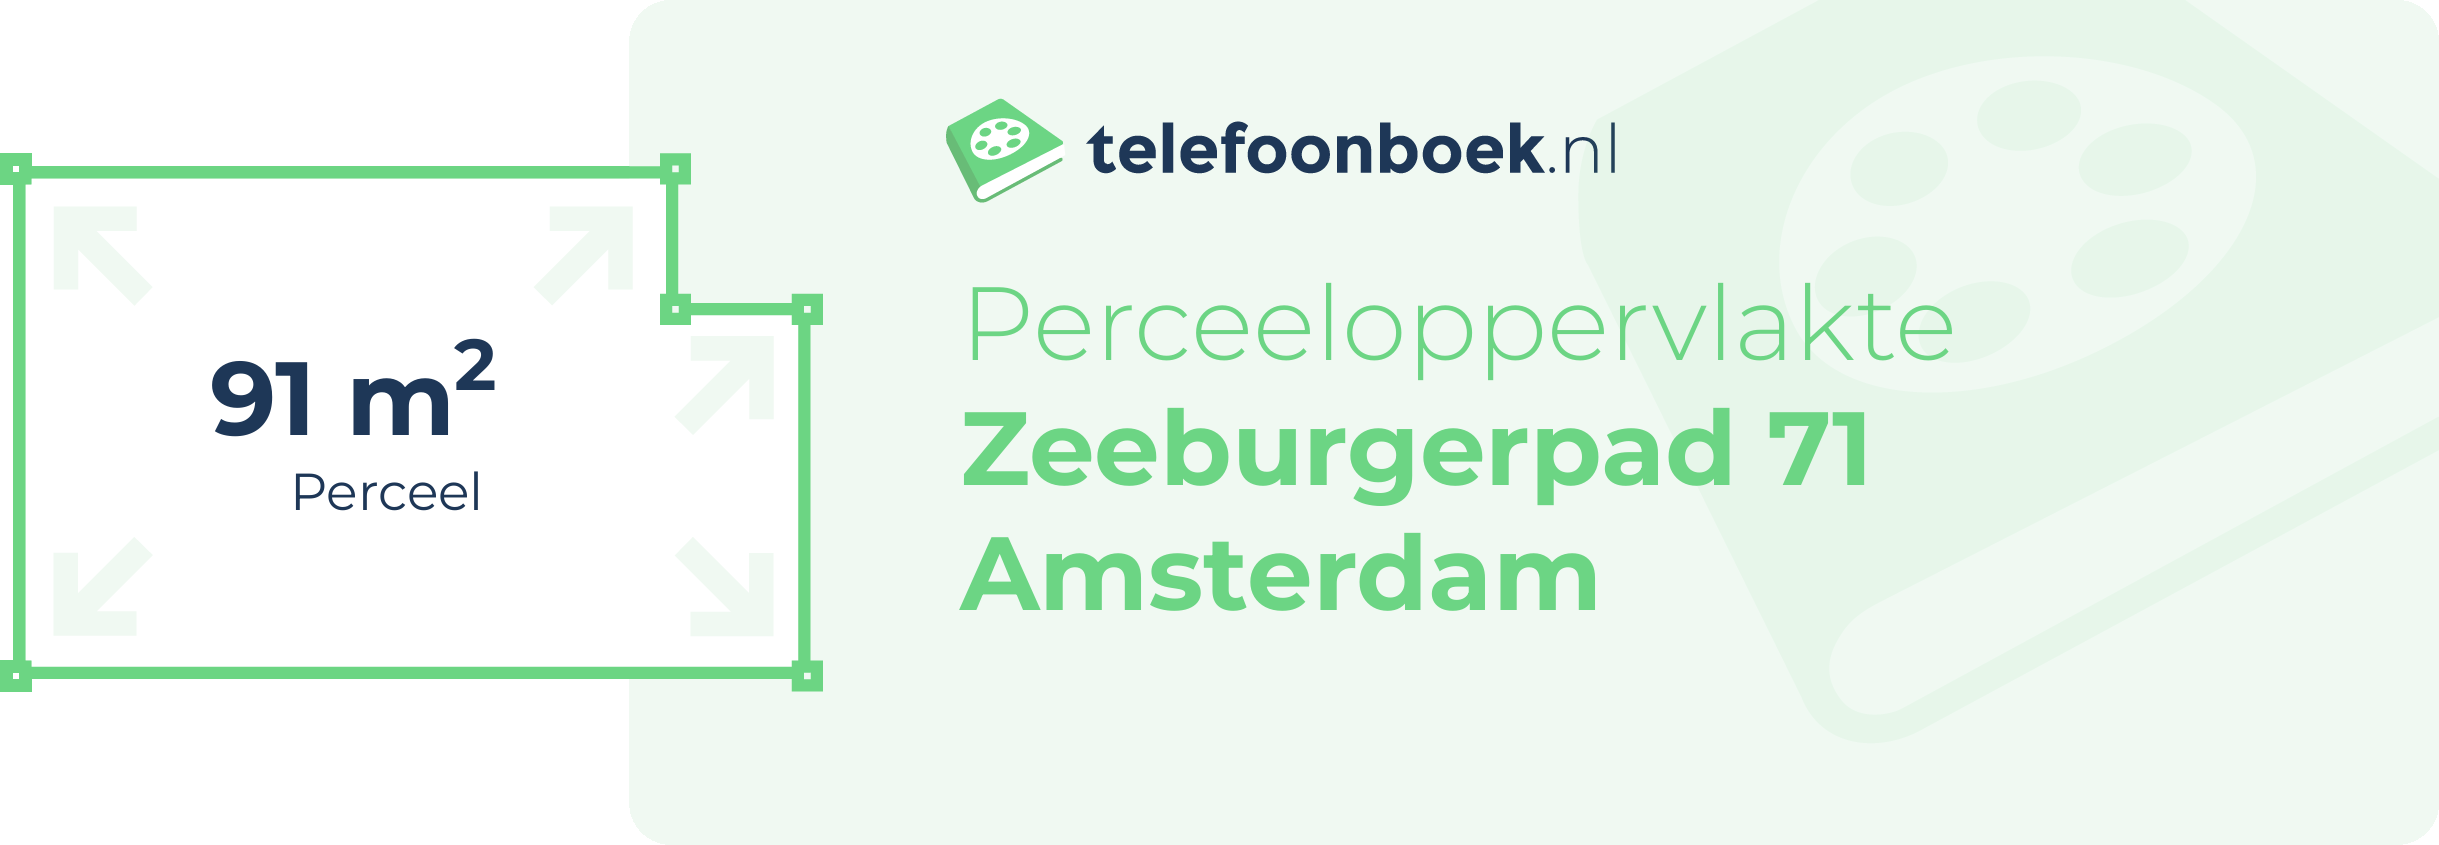 Perceeloppervlakte Zeeburgerpad 71 Amsterdam